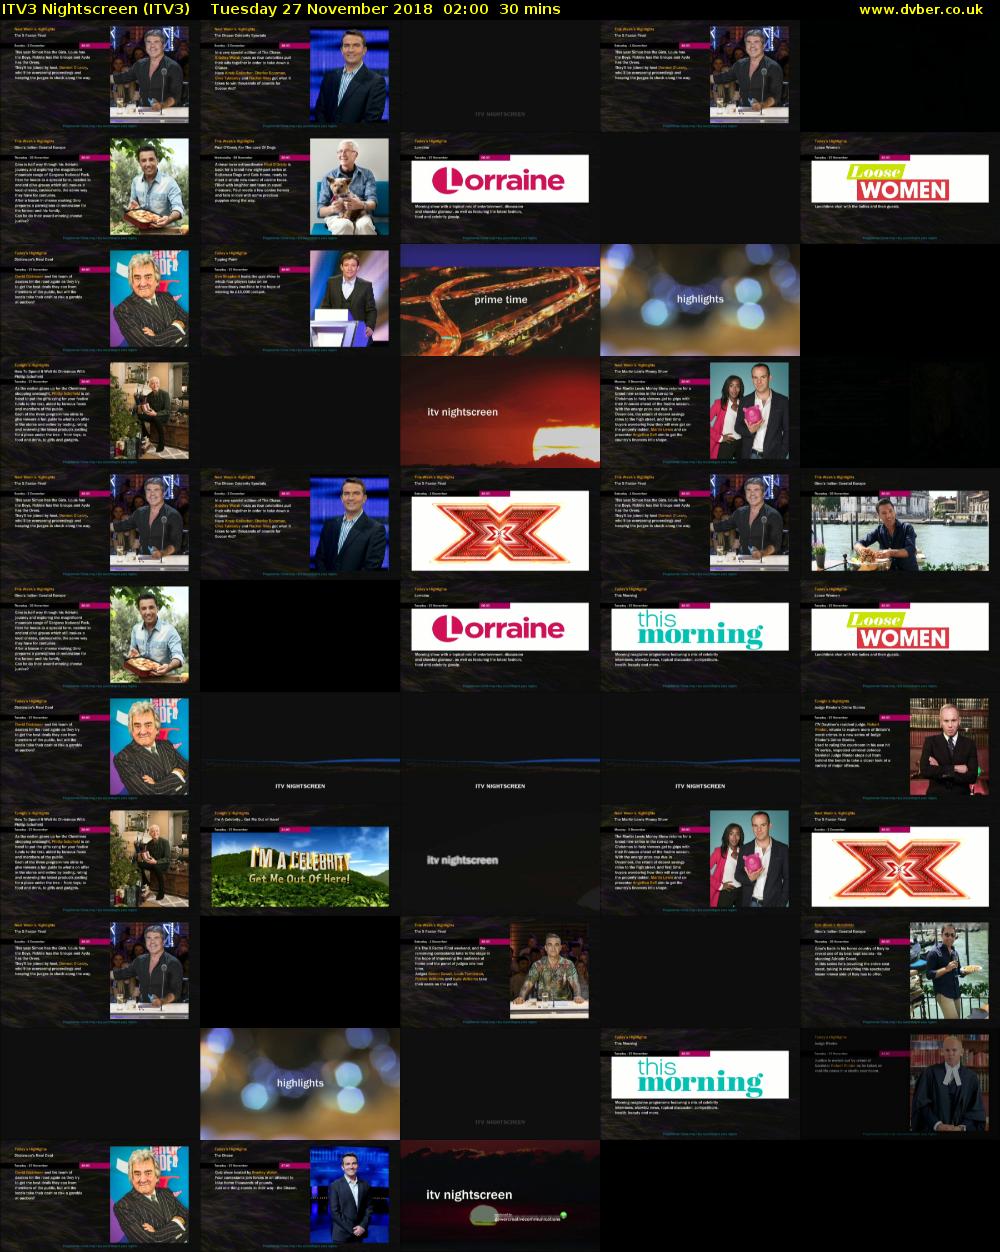 ITV3 Nightscreen (ITV3) Tuesday 27 November 2018 02:00 - 02:30